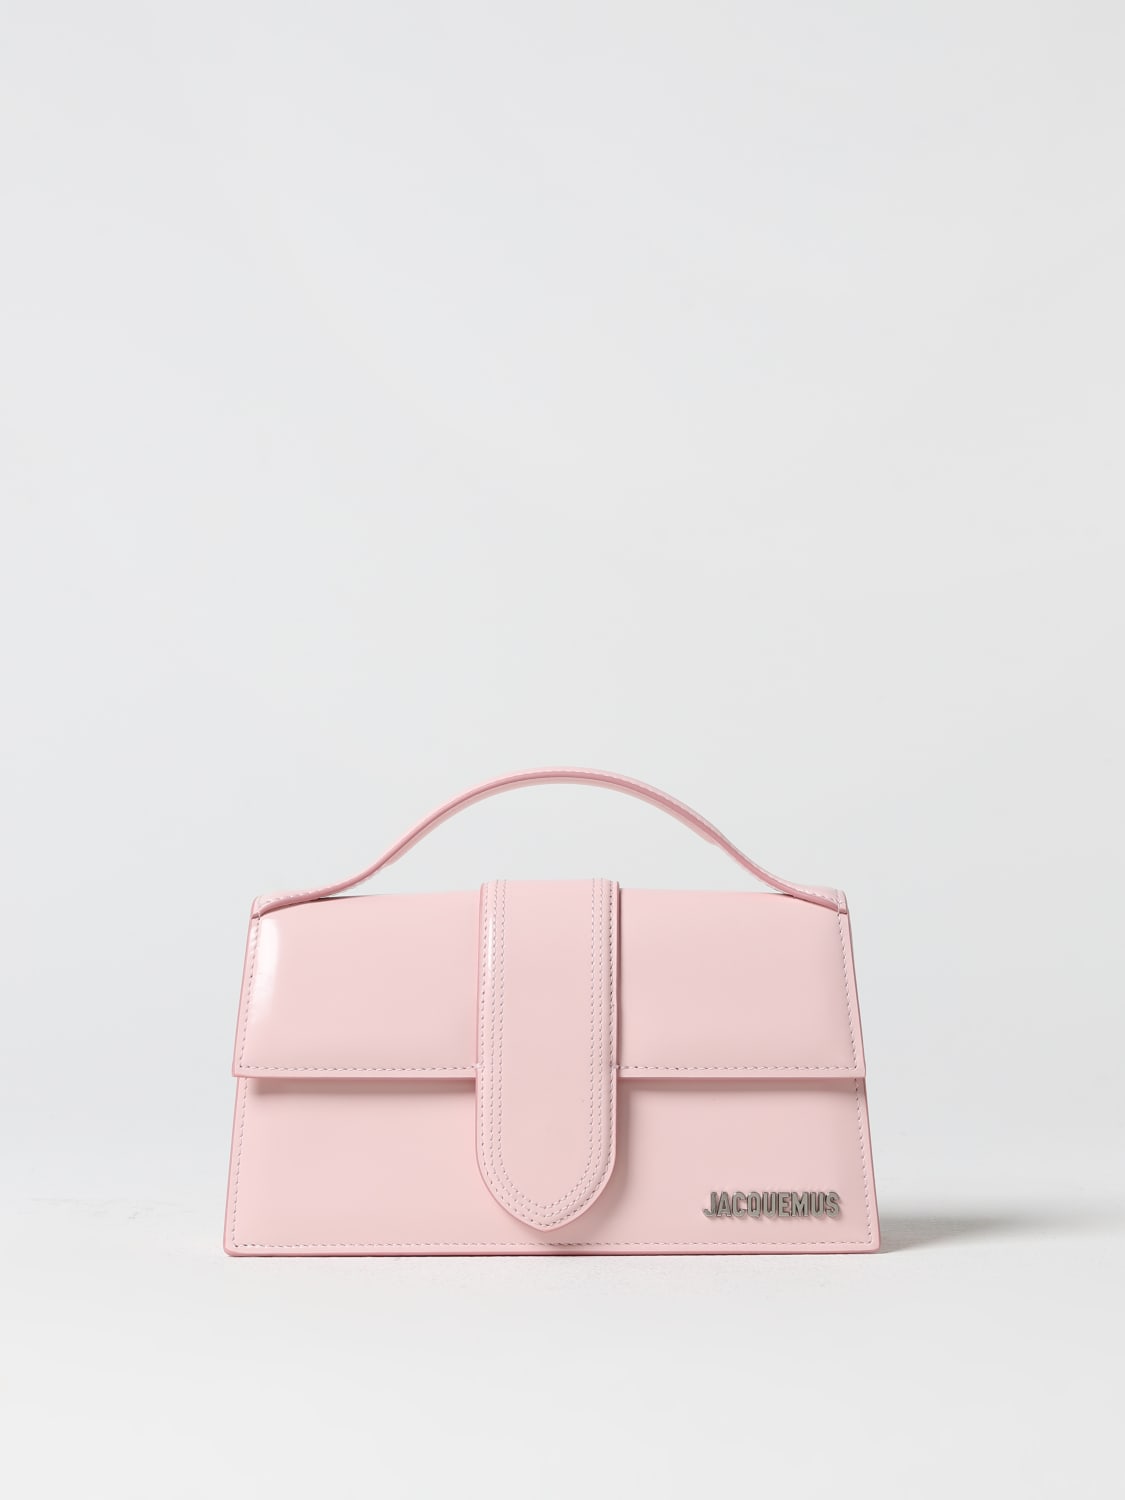 Jacquemus Le Bambino Long Leather Shoulder Bag, Pink, Women's, Handbags & Purses Shoulder Bags